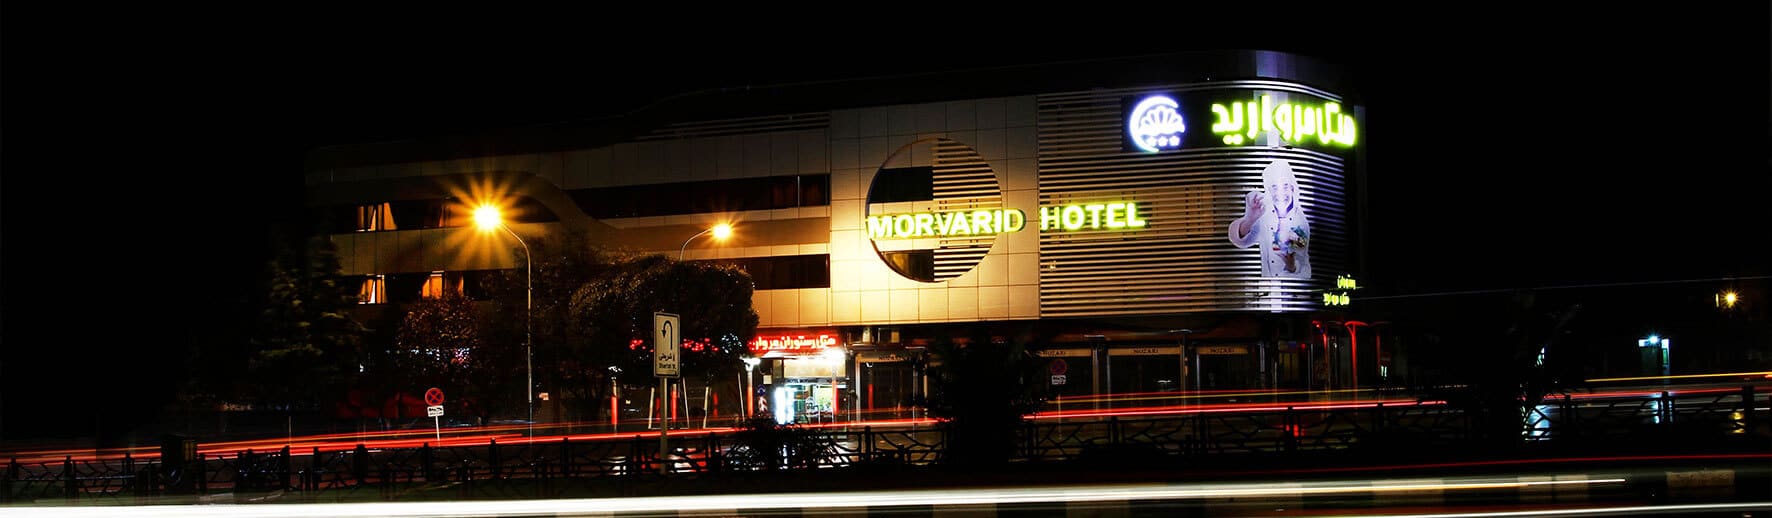 Morvarid Hotel